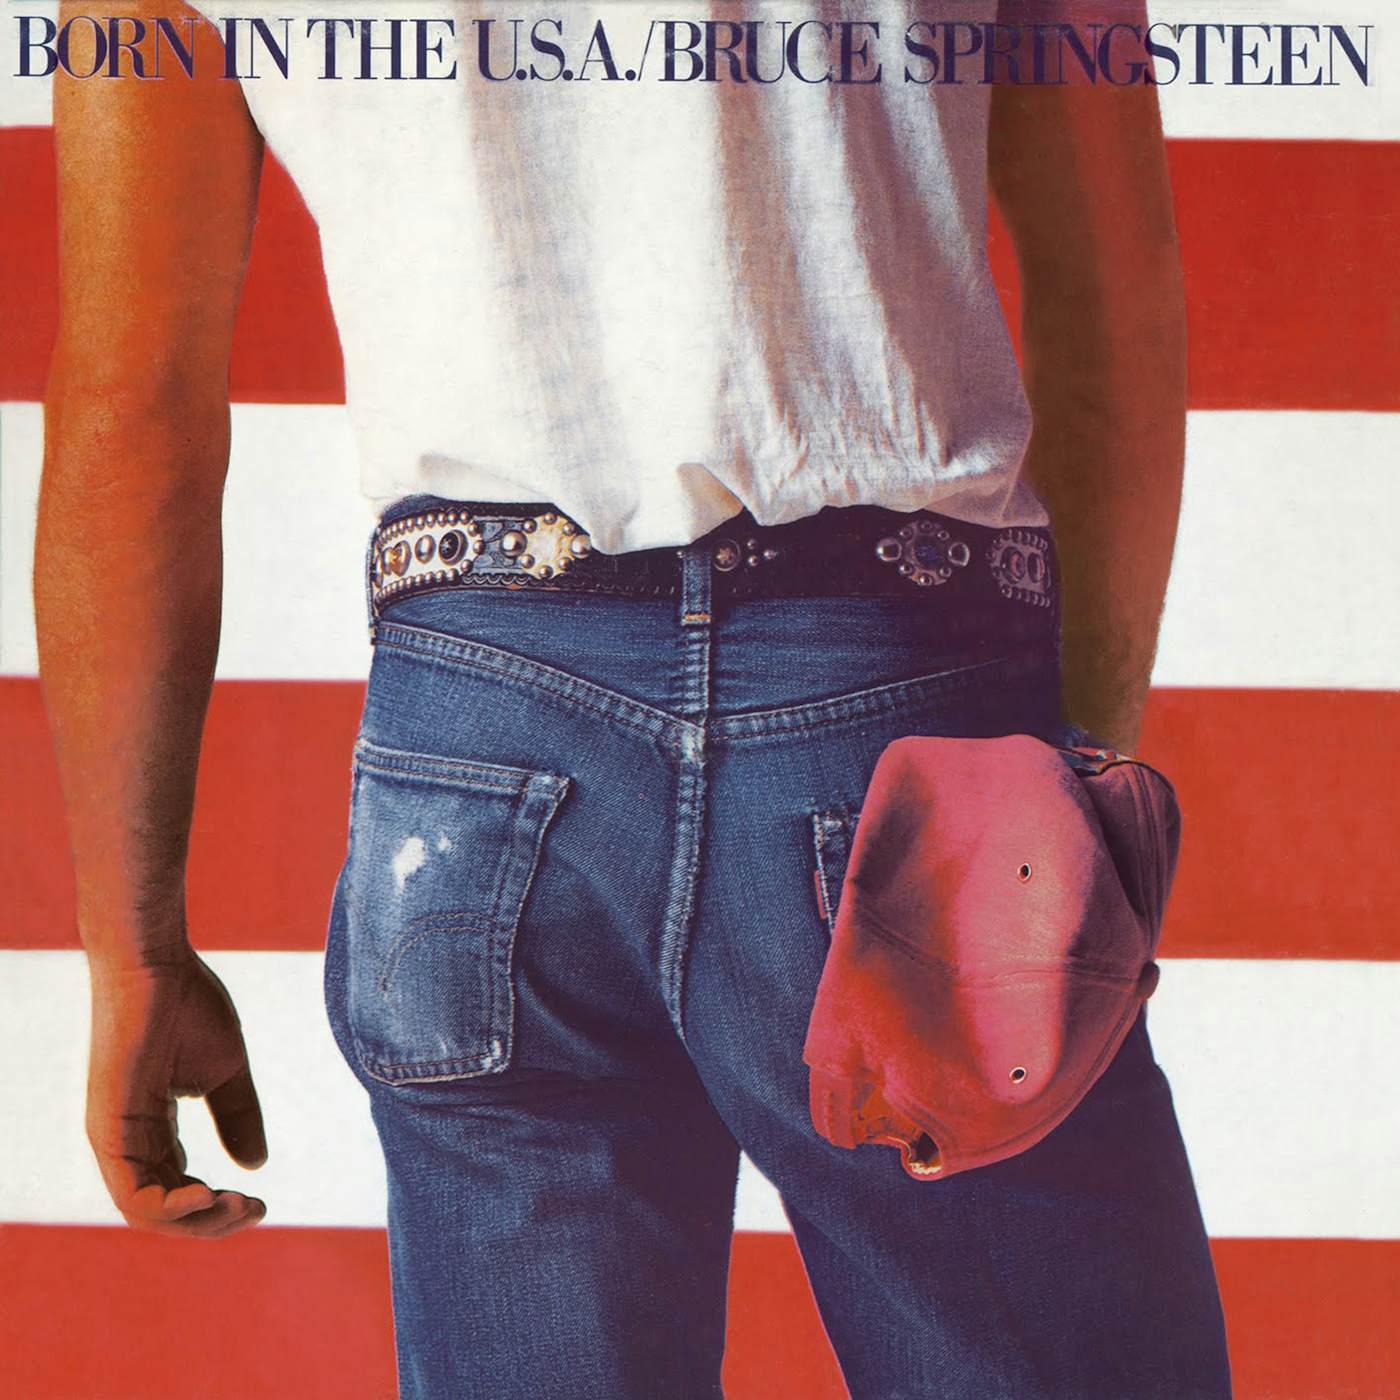 Bruce Springsteen BORN IN THE USA Vinyl Record